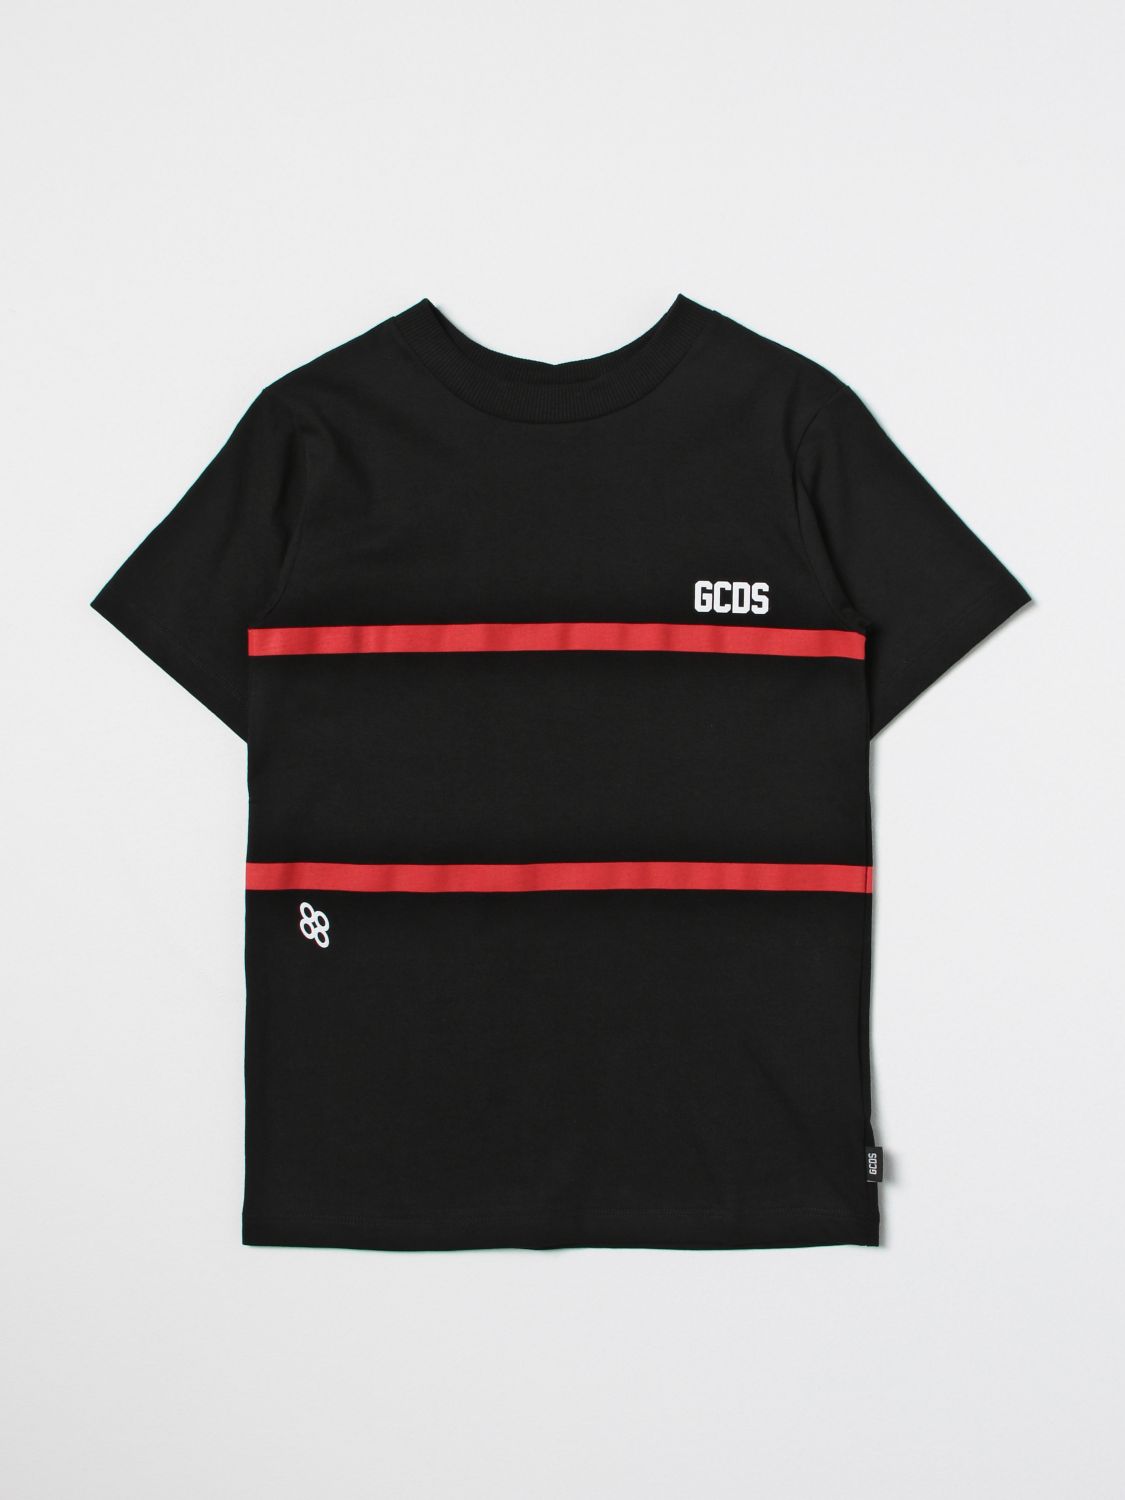 Gcds Kids T-Shirt GCDS KIDS Kids colour Black